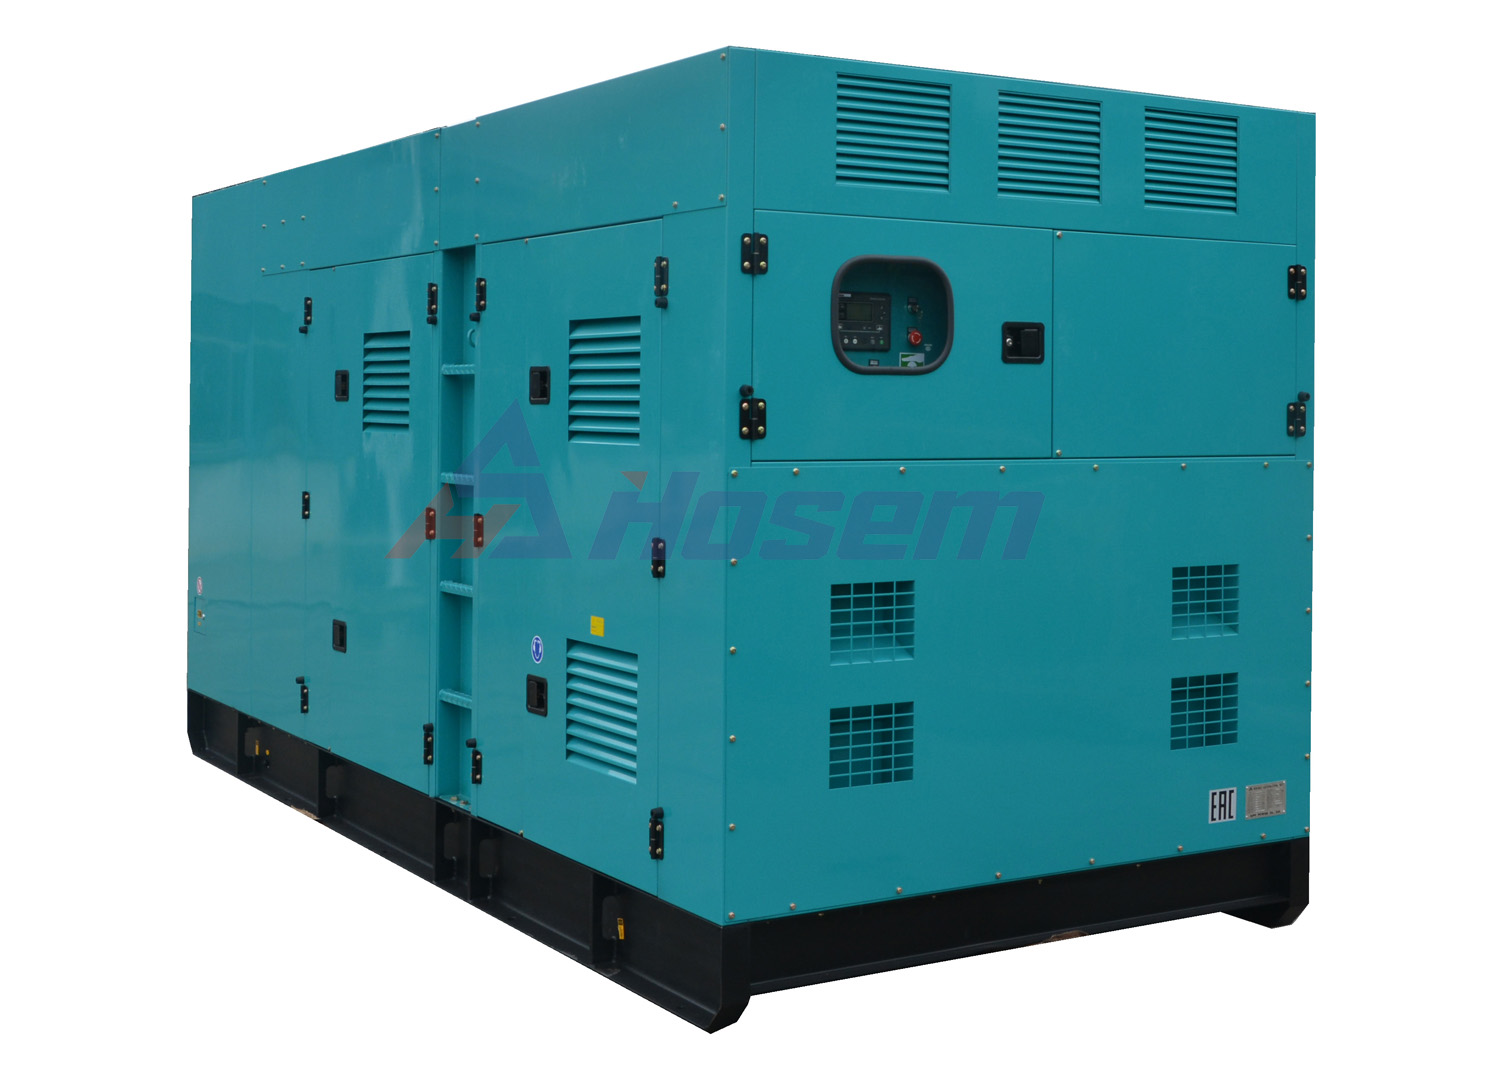 550kW Doosan Diesel Generator Set Drived by Doosan Engine DP222LB for Industrial